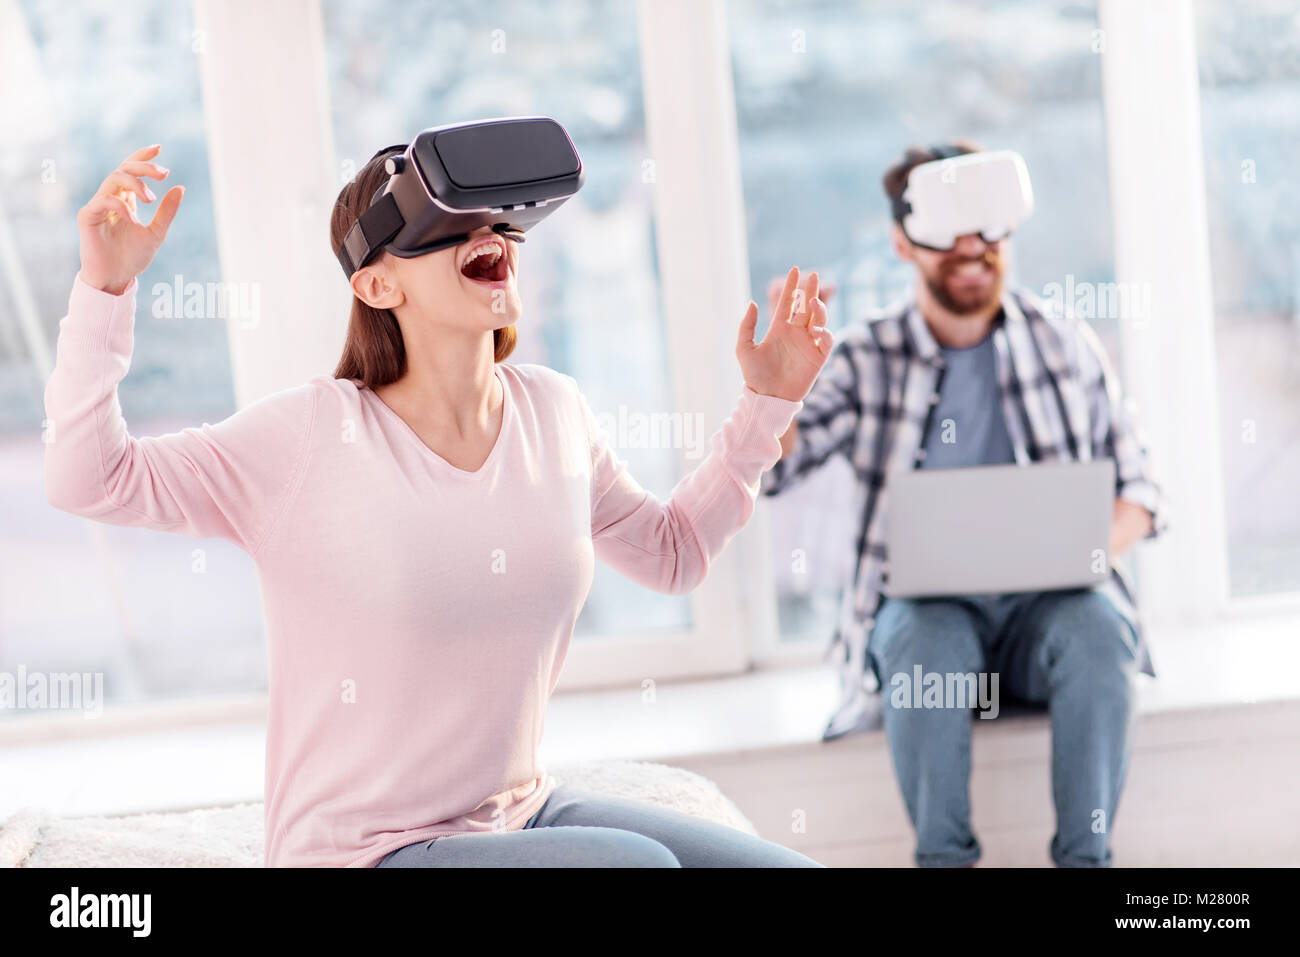 Cheerful gay woman having VR experience Stock Photo - Alamy